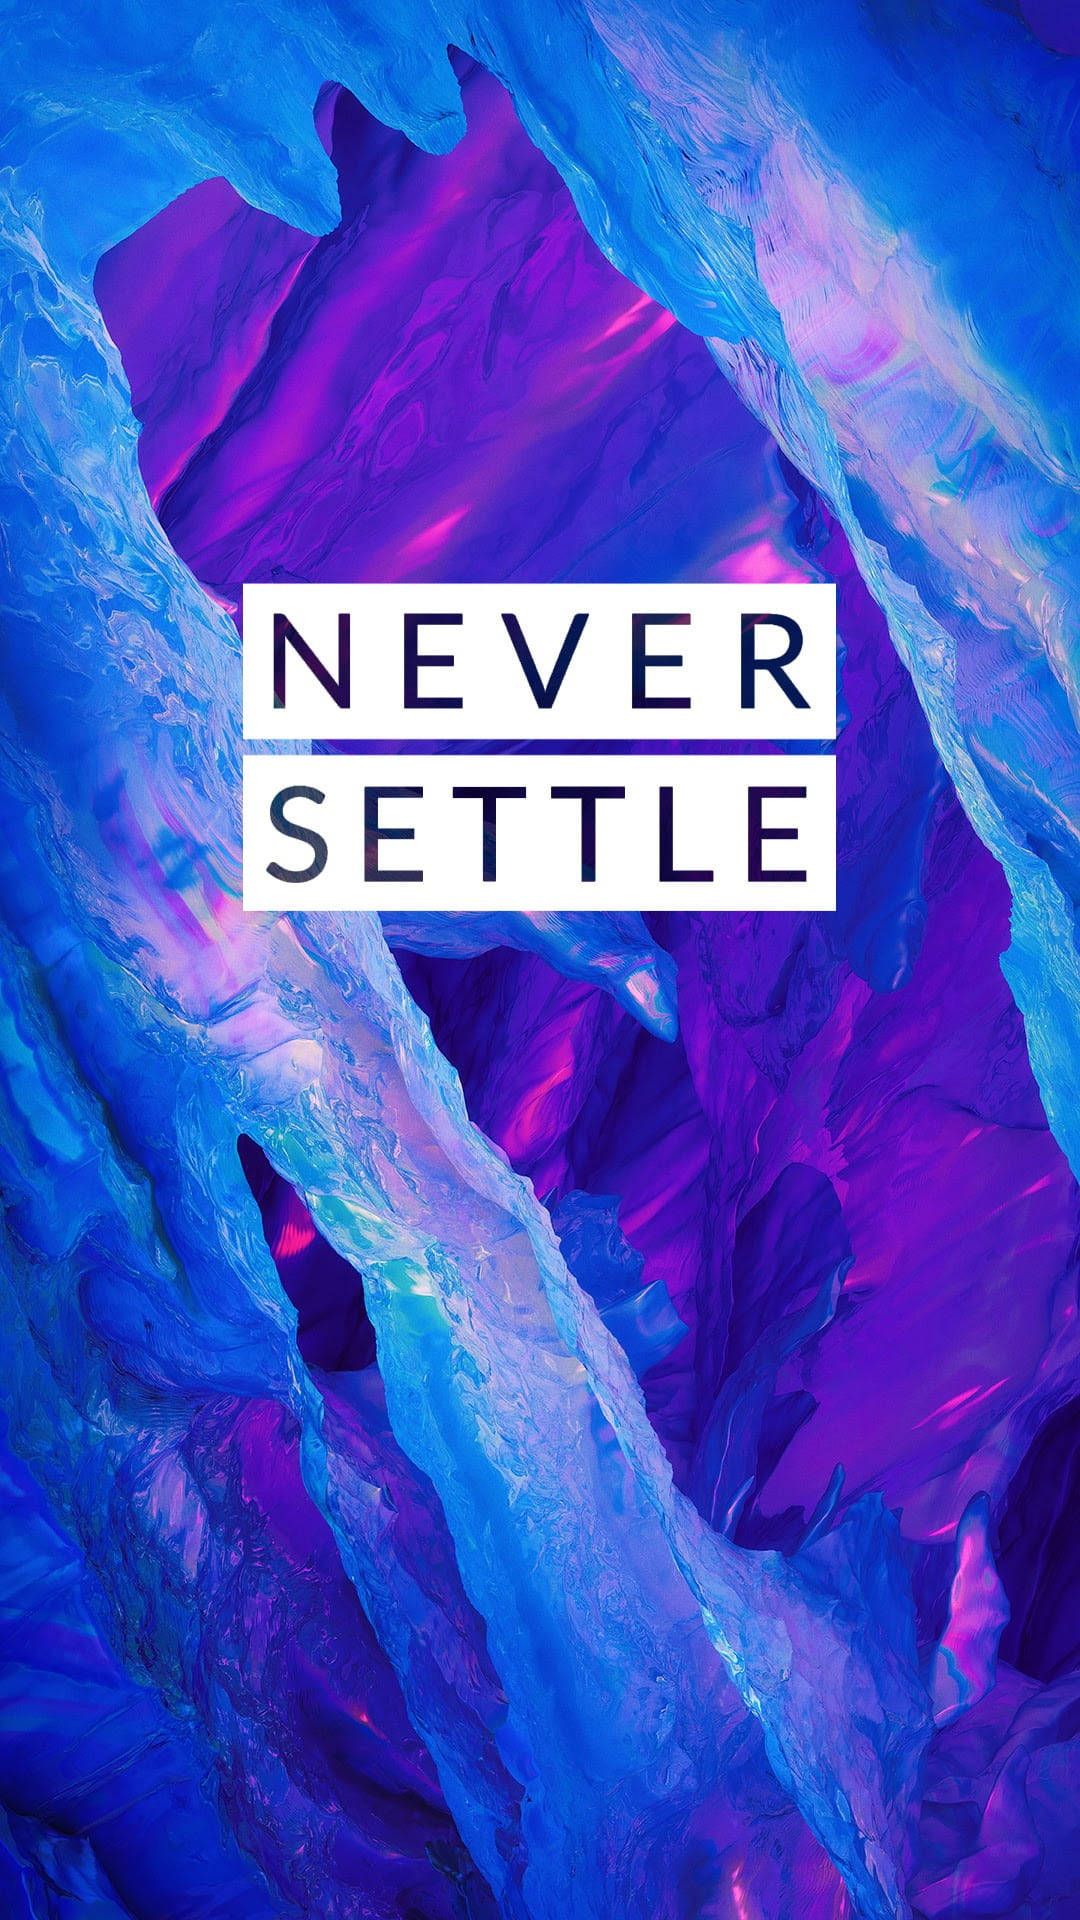 Never Settle - A Vibrant Exploration Into A Mystical Cave Background